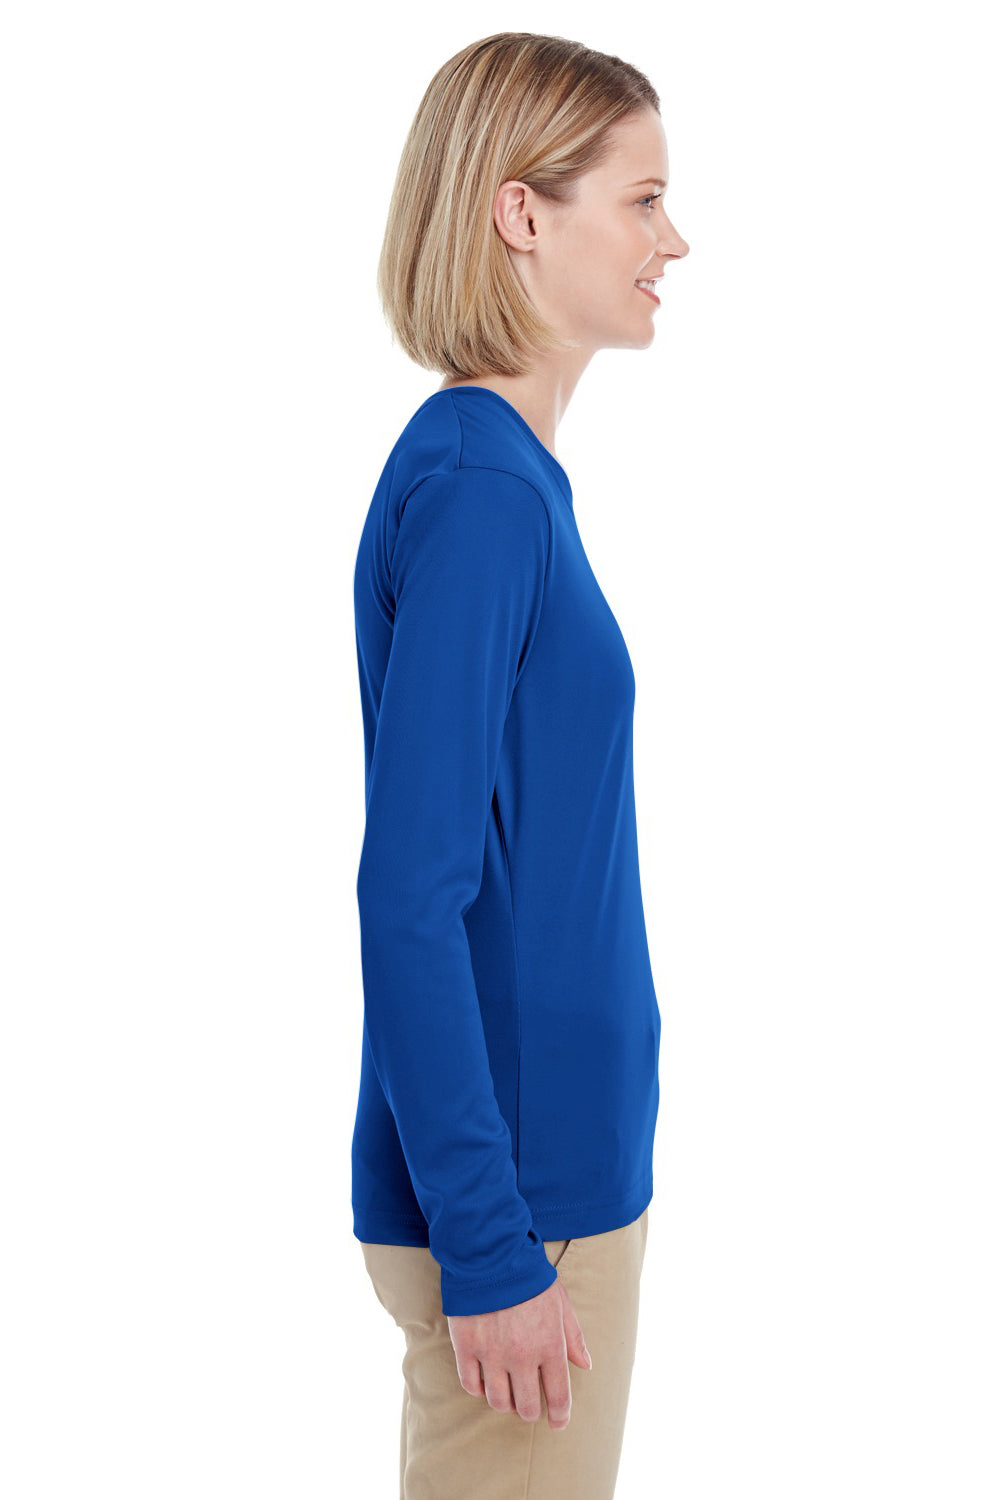 UltraClub 8622W Womens Cool & Dry Performance Moisture Wicking Long Sleeve Crewneck T-Shirt Royal Blue Side